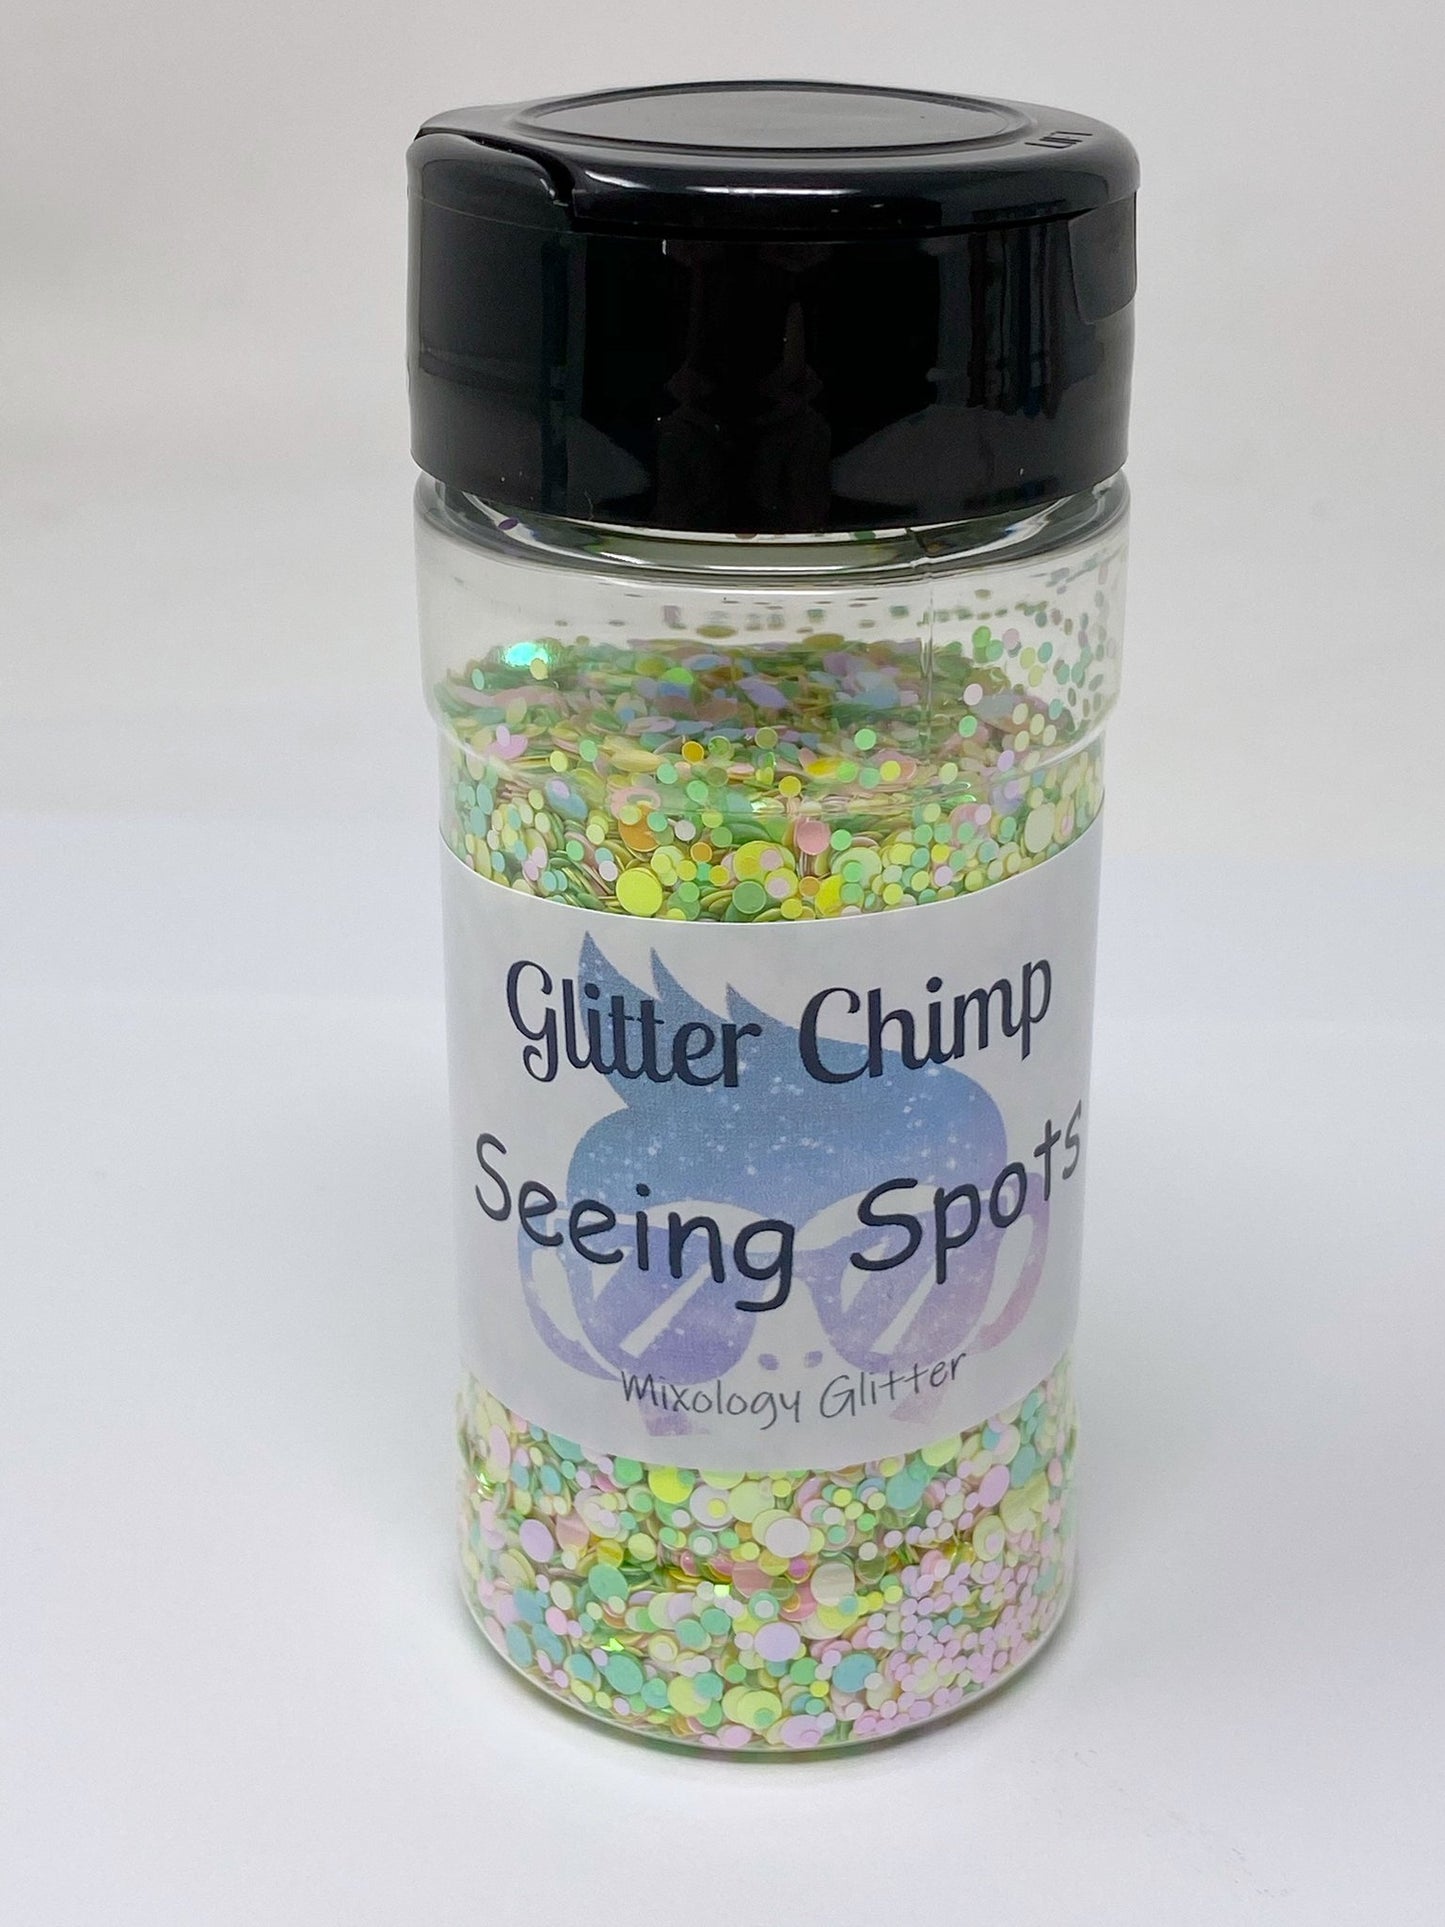 Seeing Spots Mixology Glitter